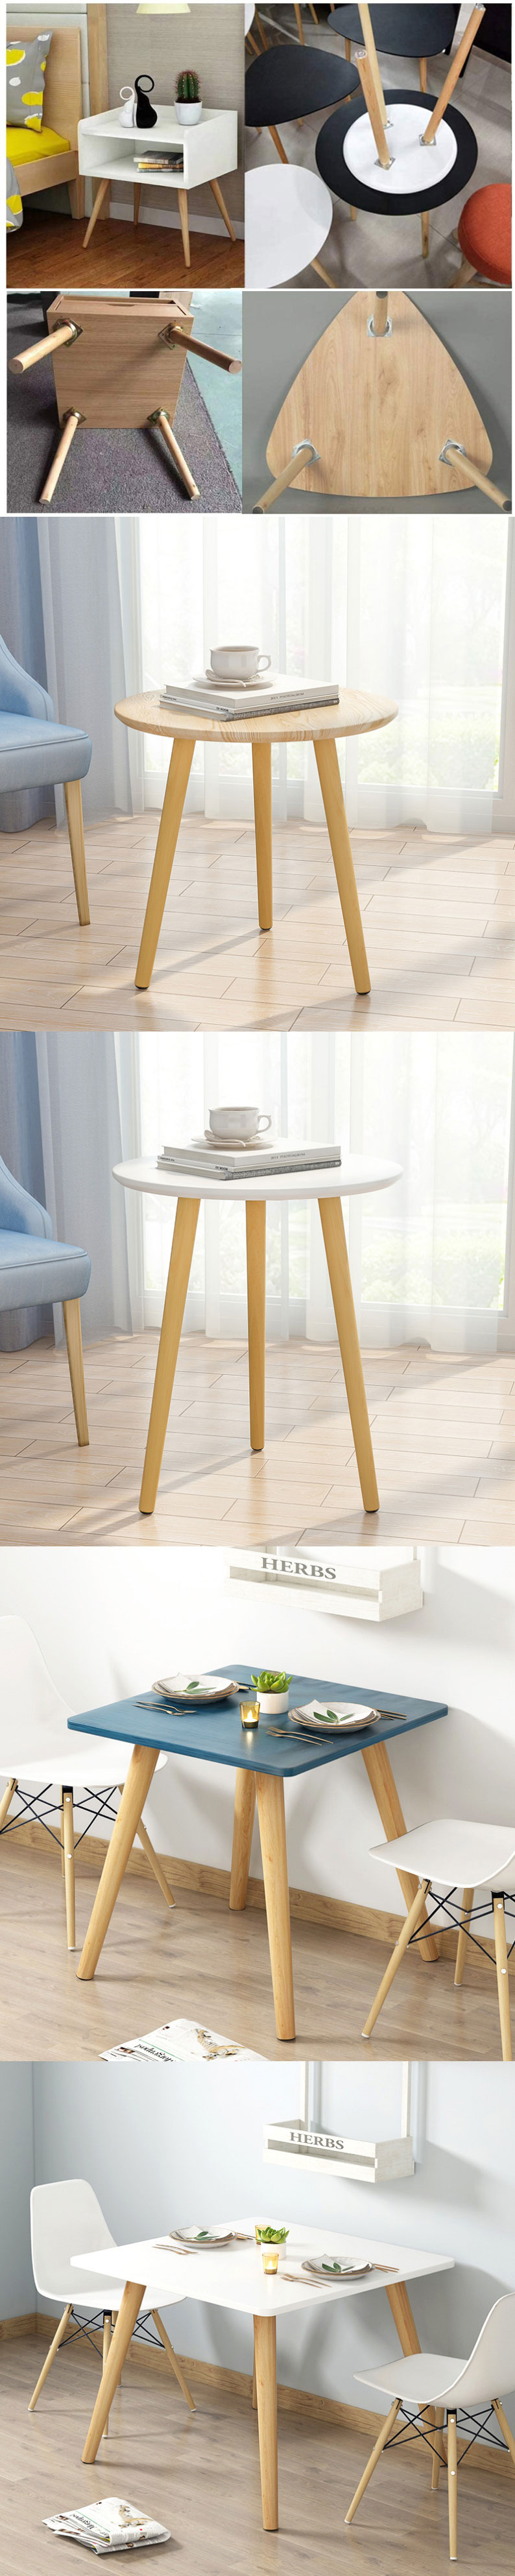 metal furniture leg wooden color (3)